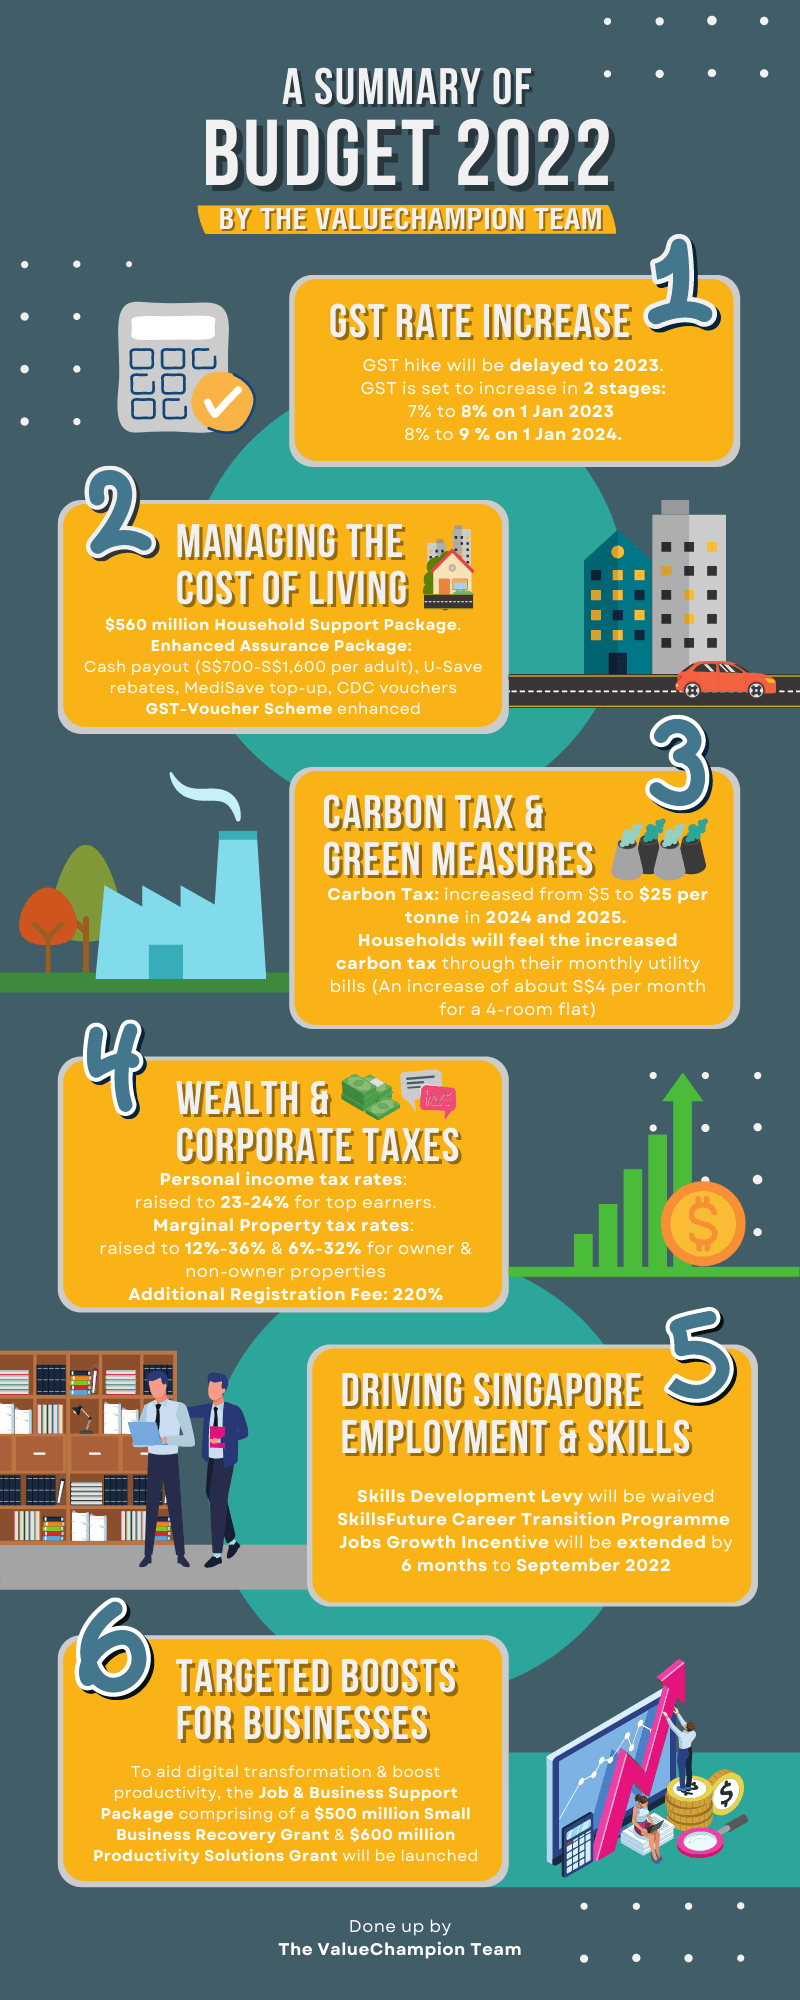 budget-2022-a-brief-summary-highlights-and-key-statistics-singapore